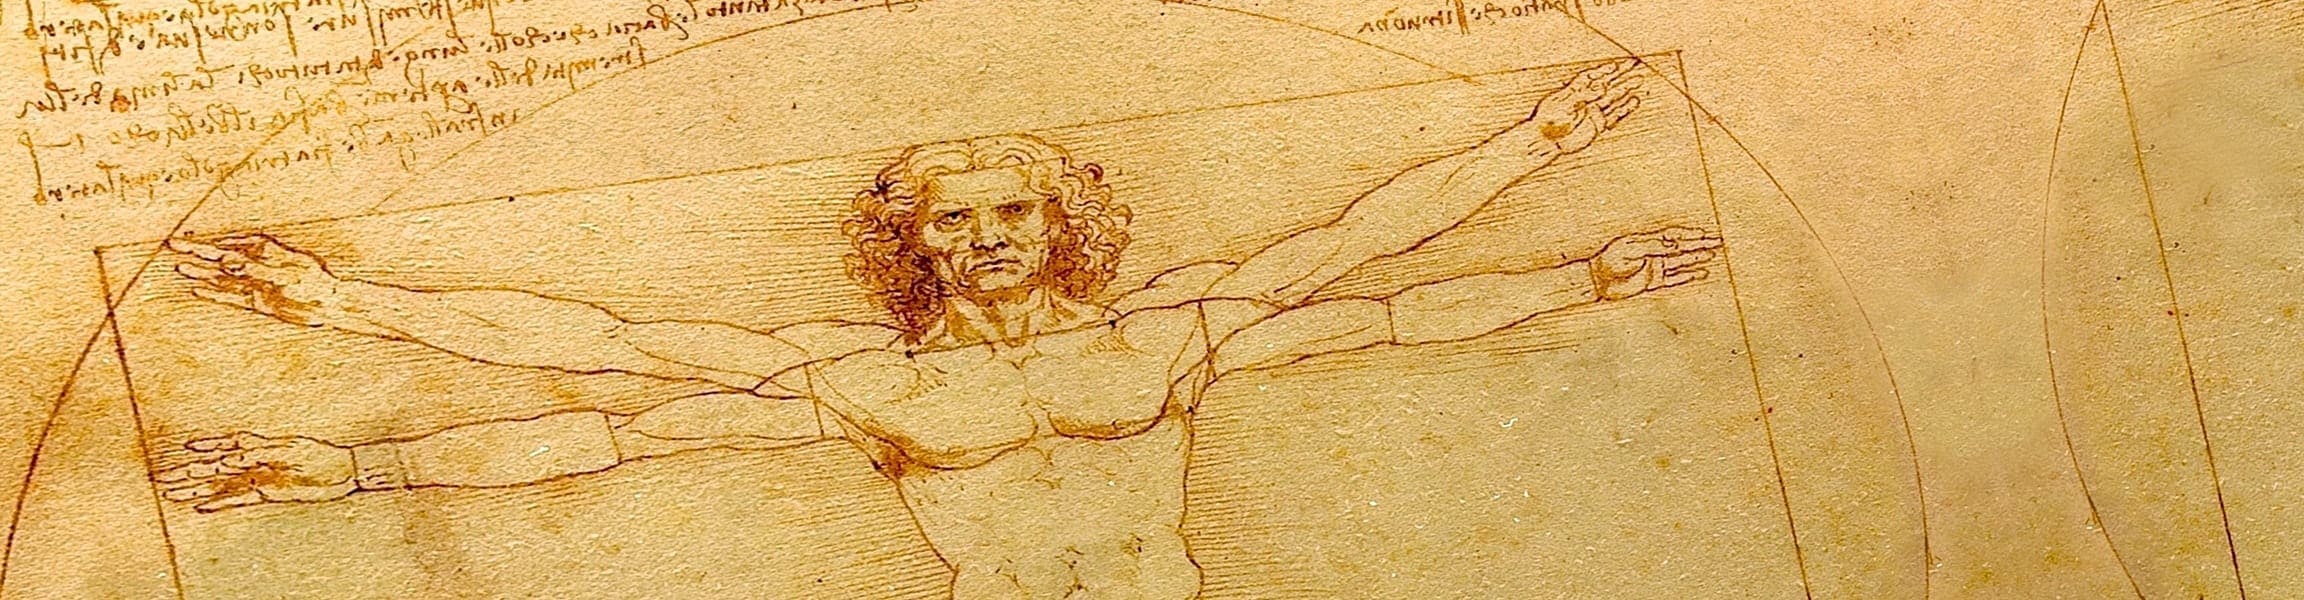 image of Leonardo DaVinci's Vitruvian man drawing